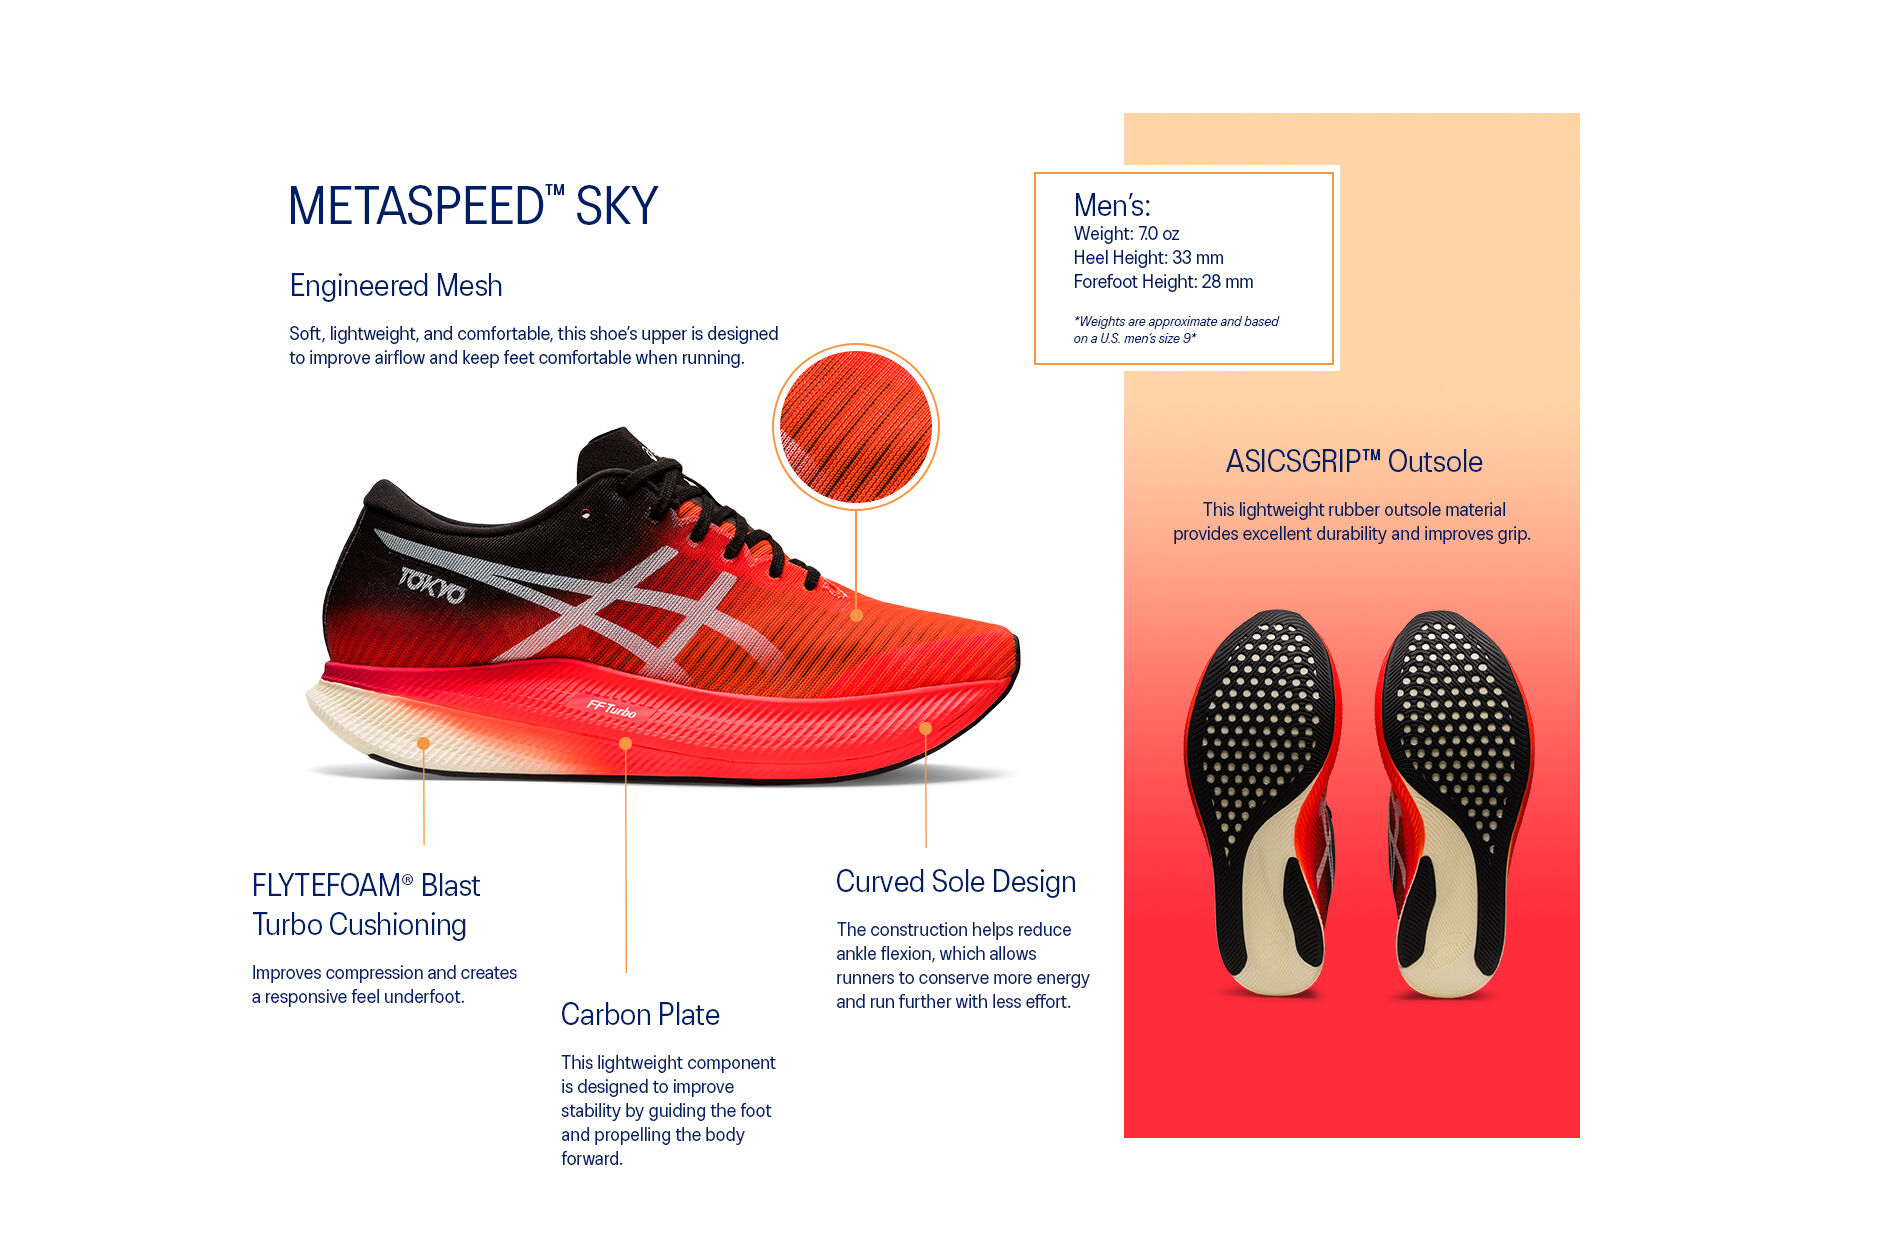 Men's METASPEED SKY | Performance Red/Black | Running Shoes | ASICS